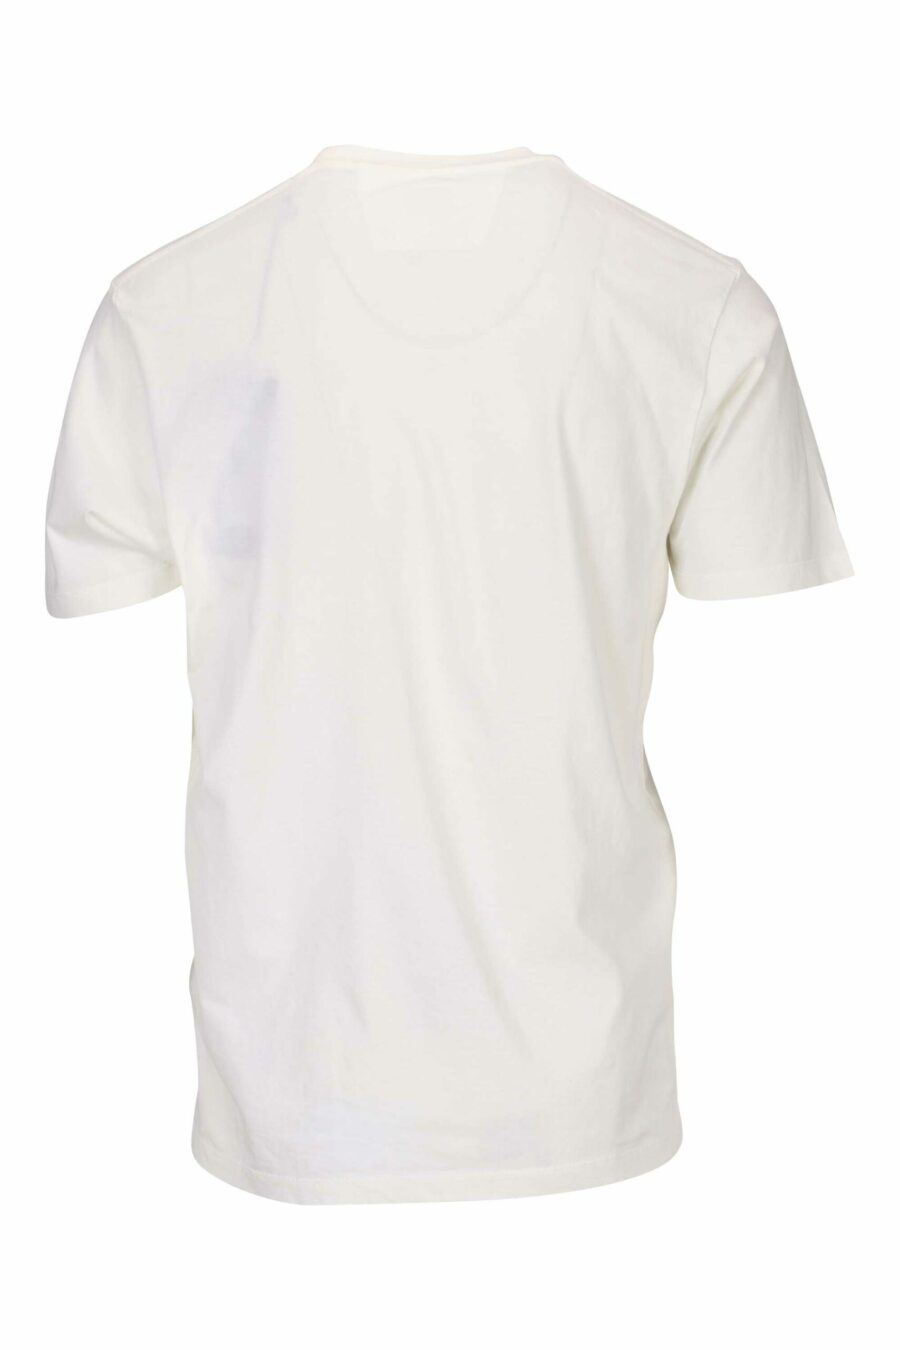 T-shirt blanc avec marin flou - 7620943601091 1 scaled